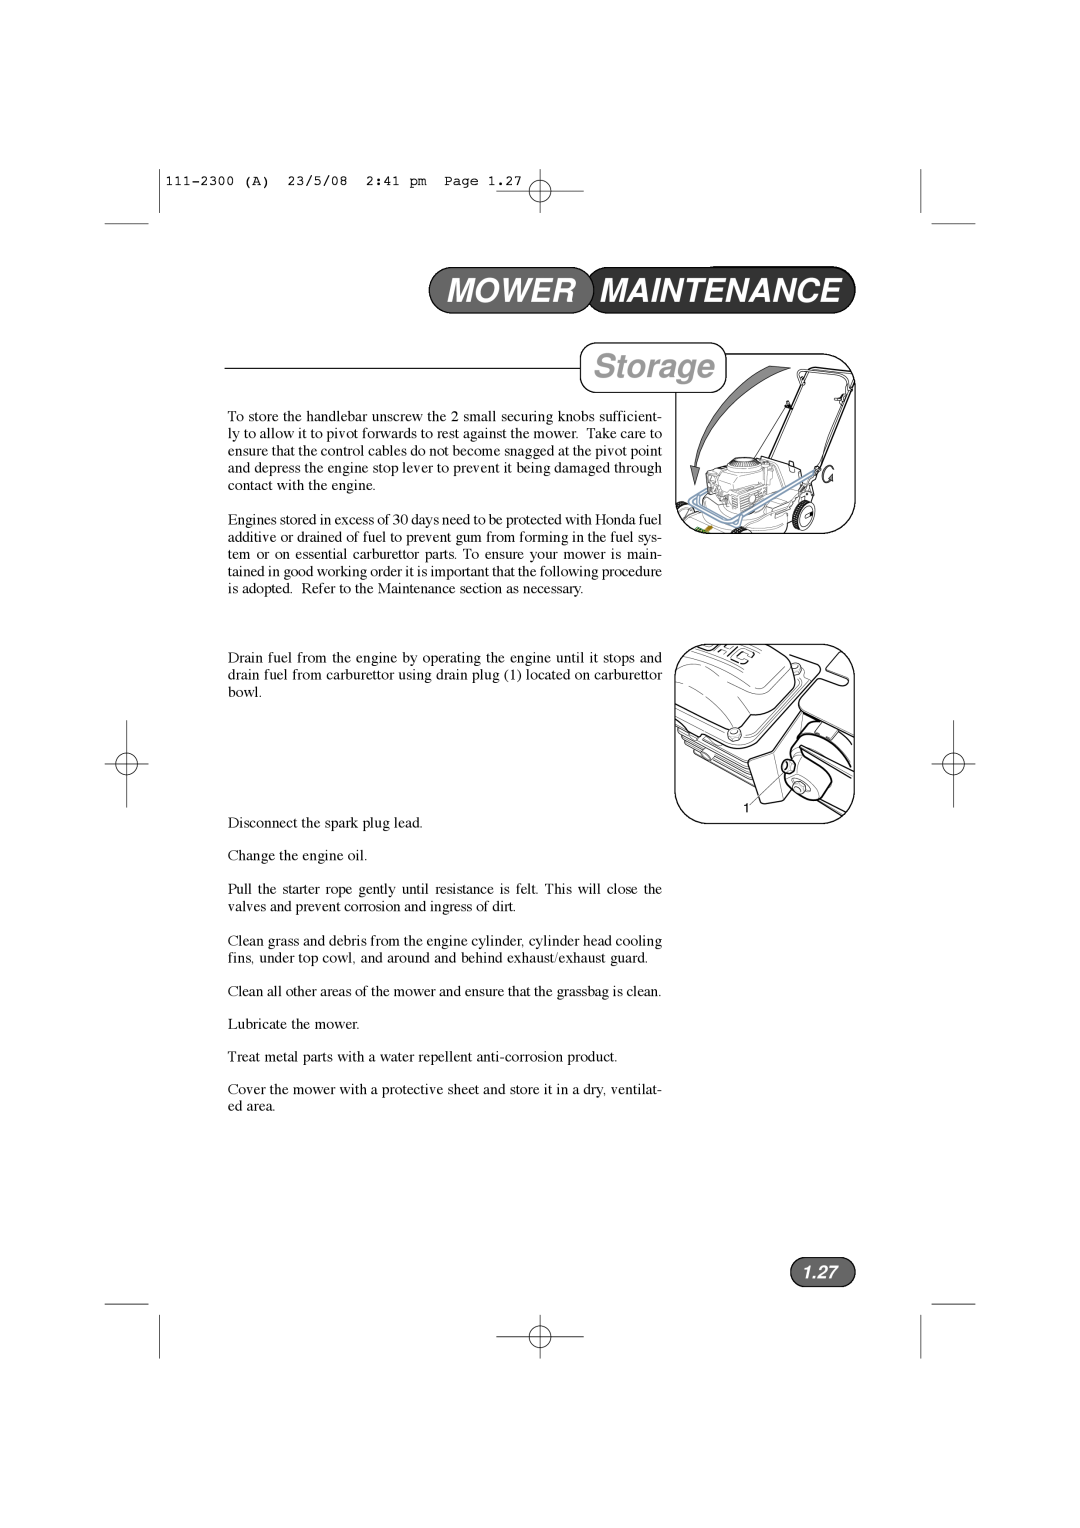 Hayter Mowers 432F, 434F, 435F, 433F manual Storage, 1.27, Mower Maintenance 